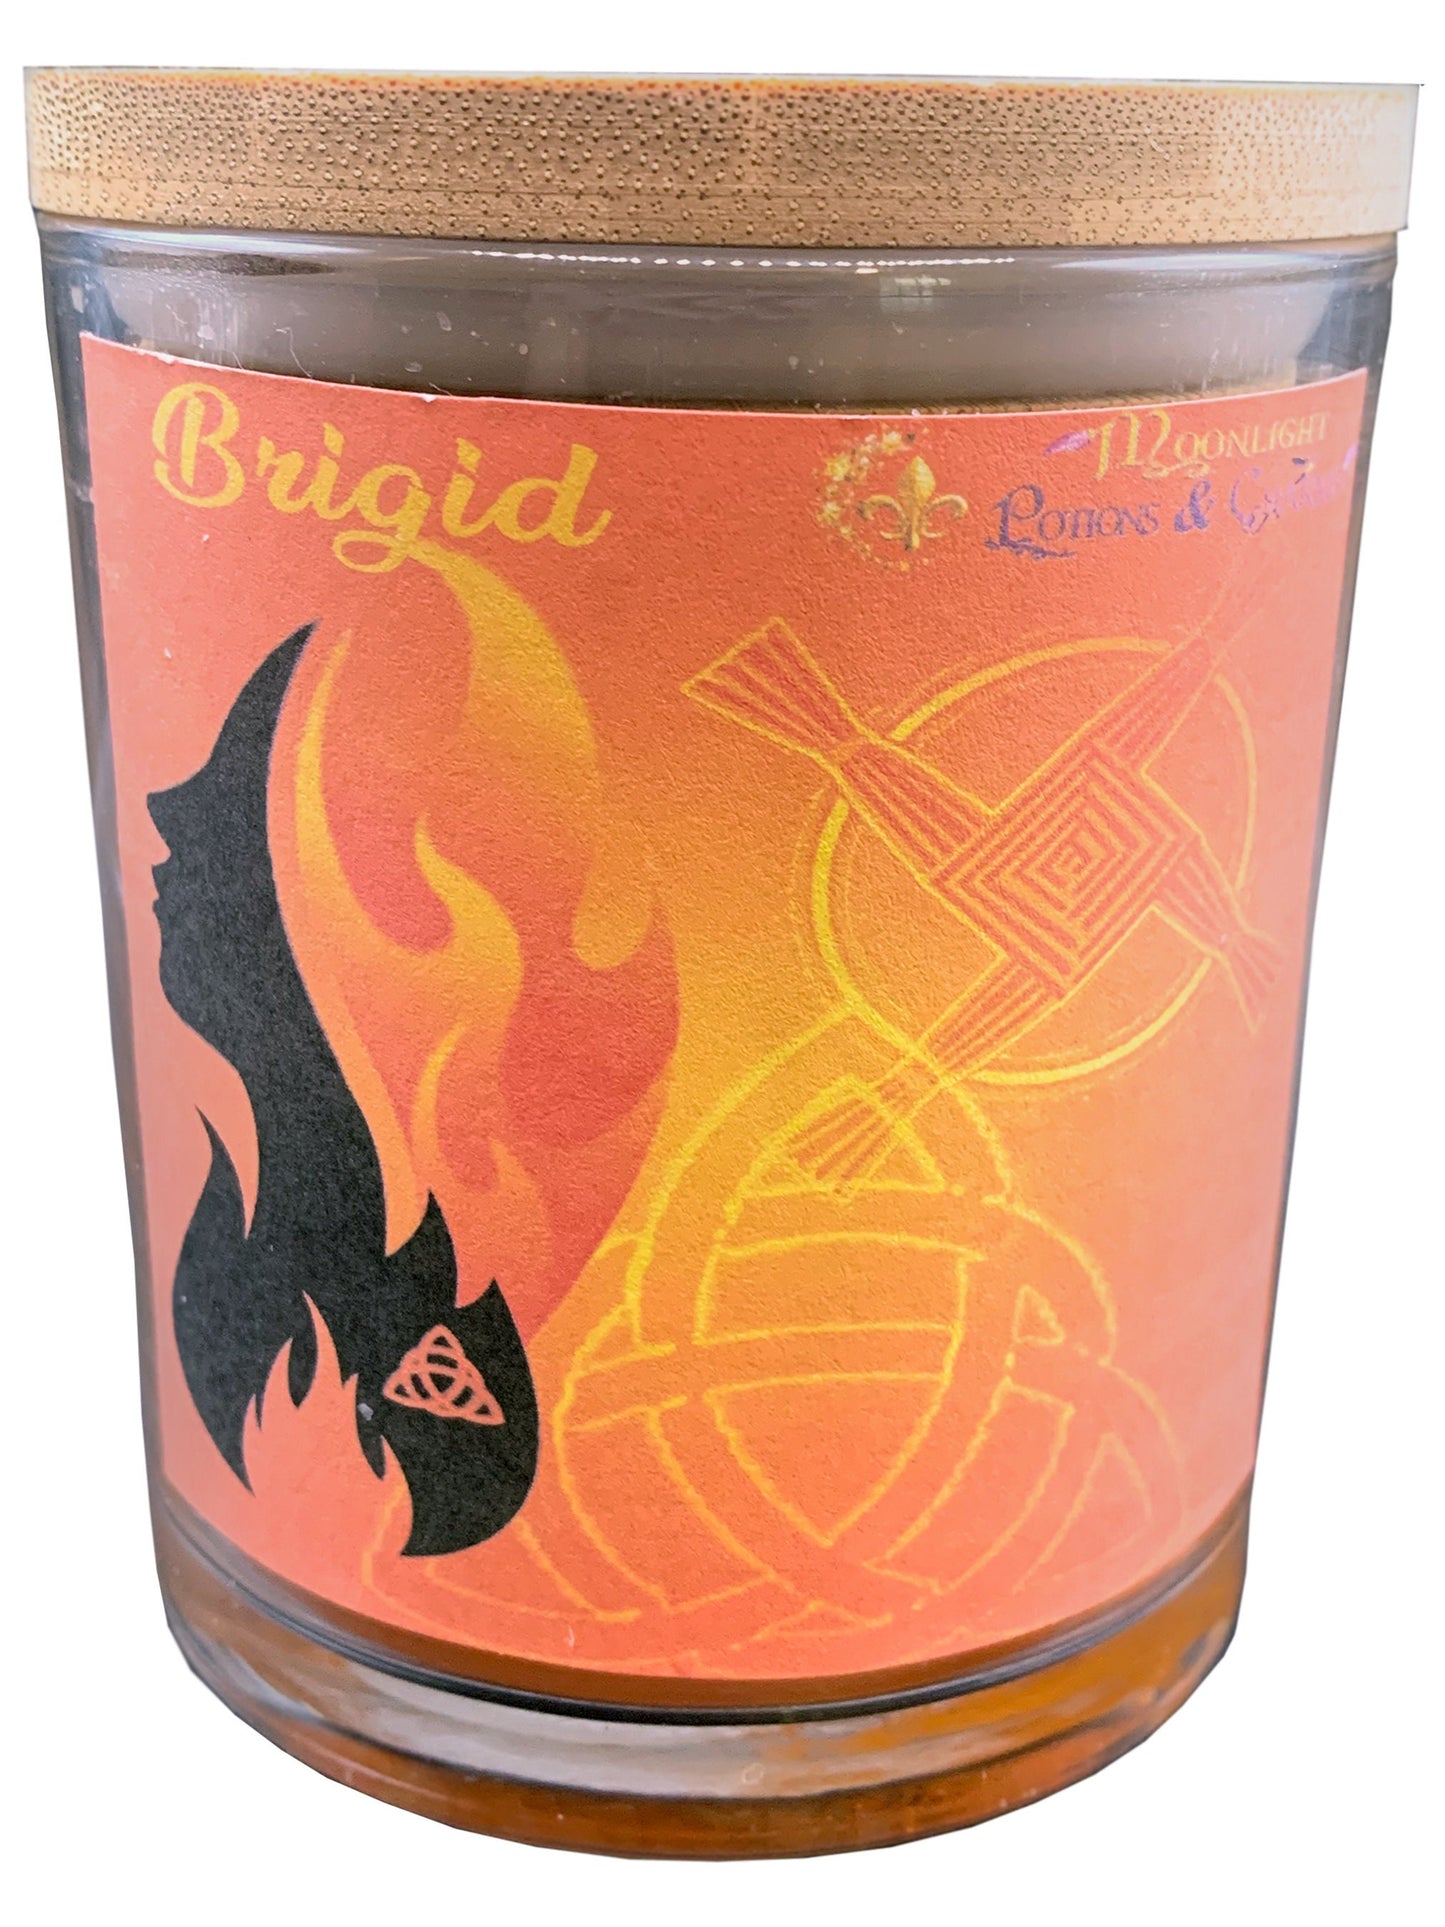 Brigid Prayer Candle